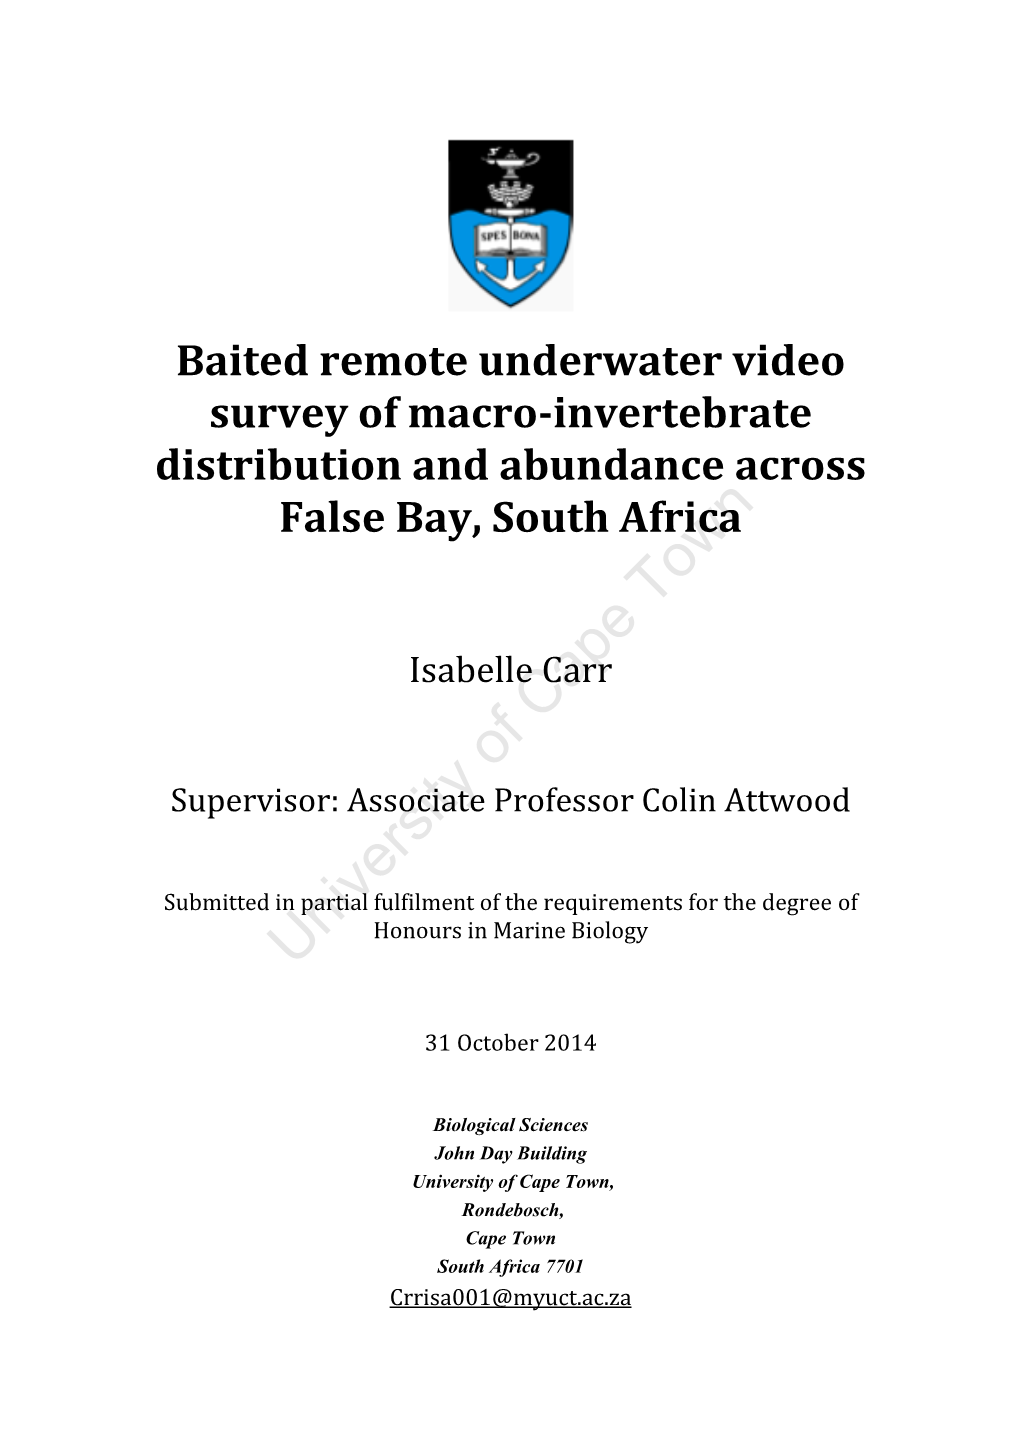 Baited Remote Underwater Video Survey of Macro-Invertebrate Distribution and Abundance Across False Bay, South Africa